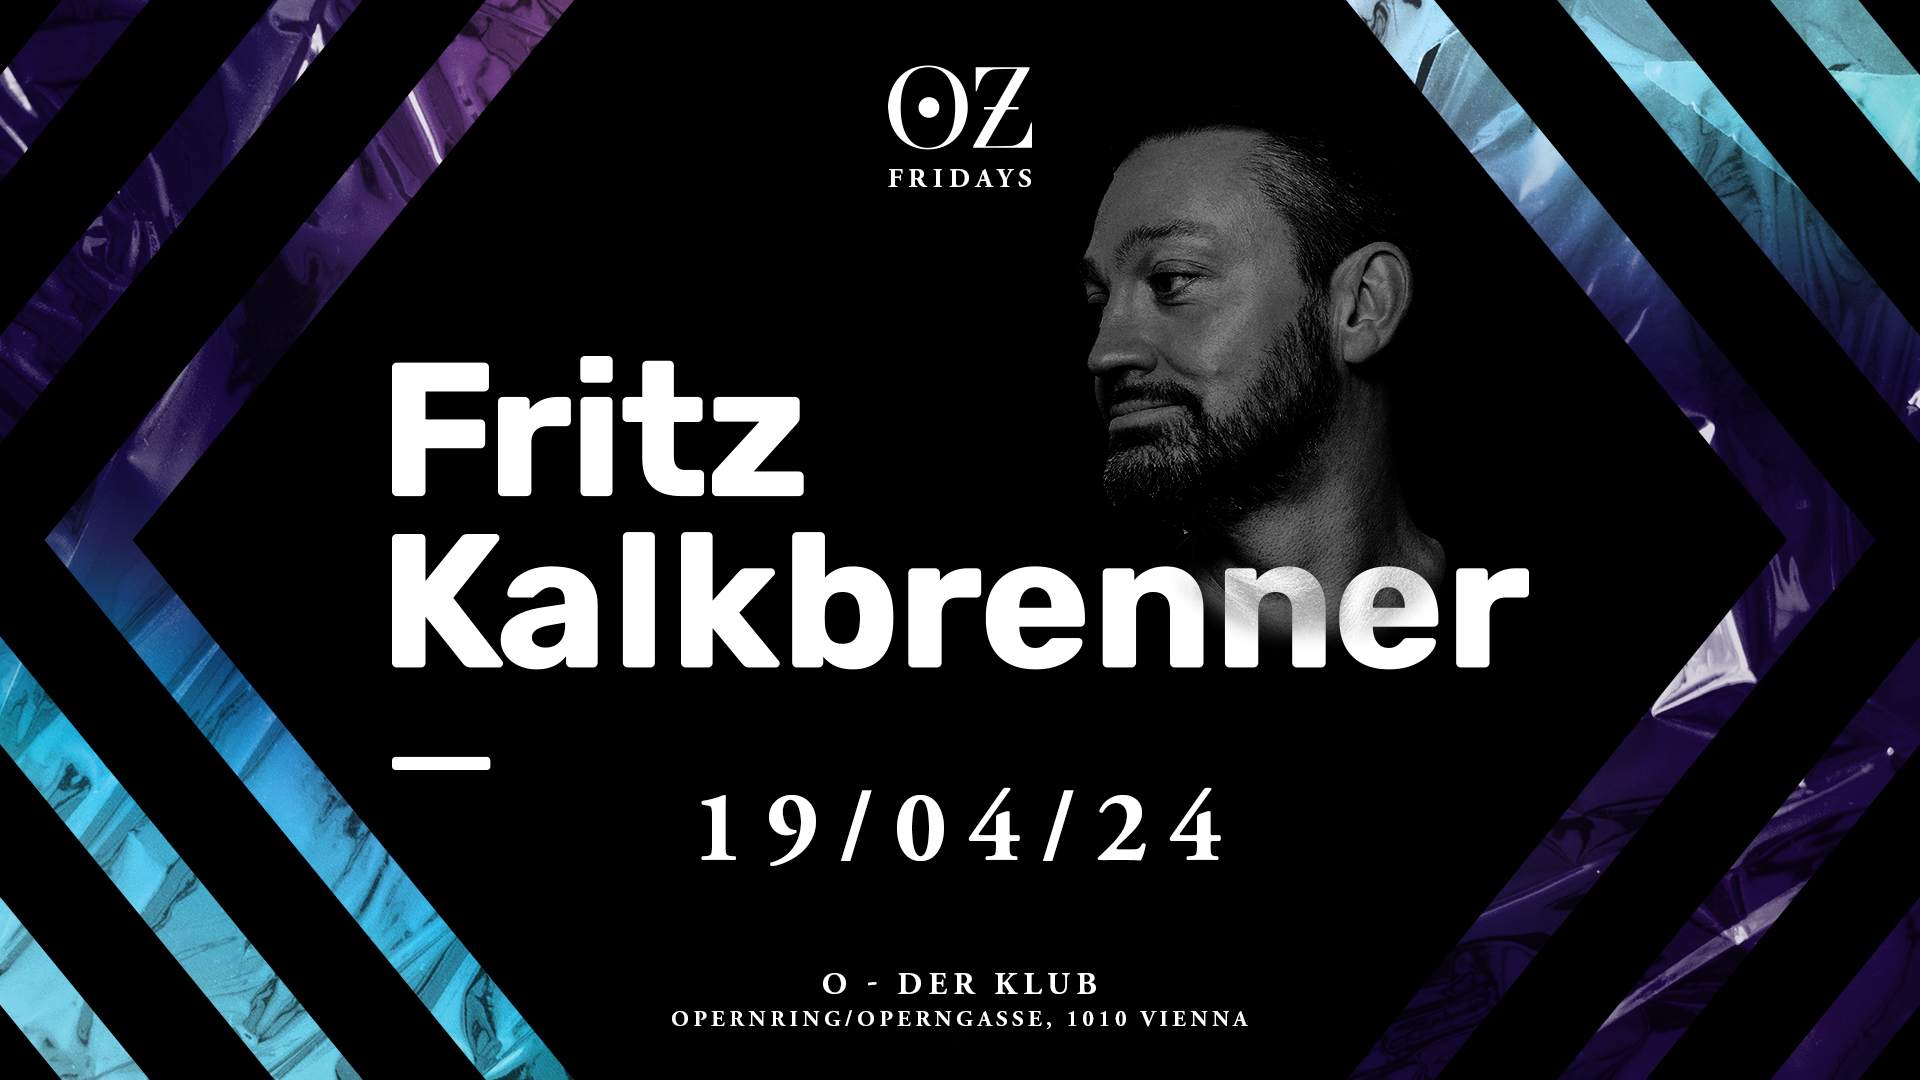 OZ with Fritz Kalkbrenner - フライヤー表